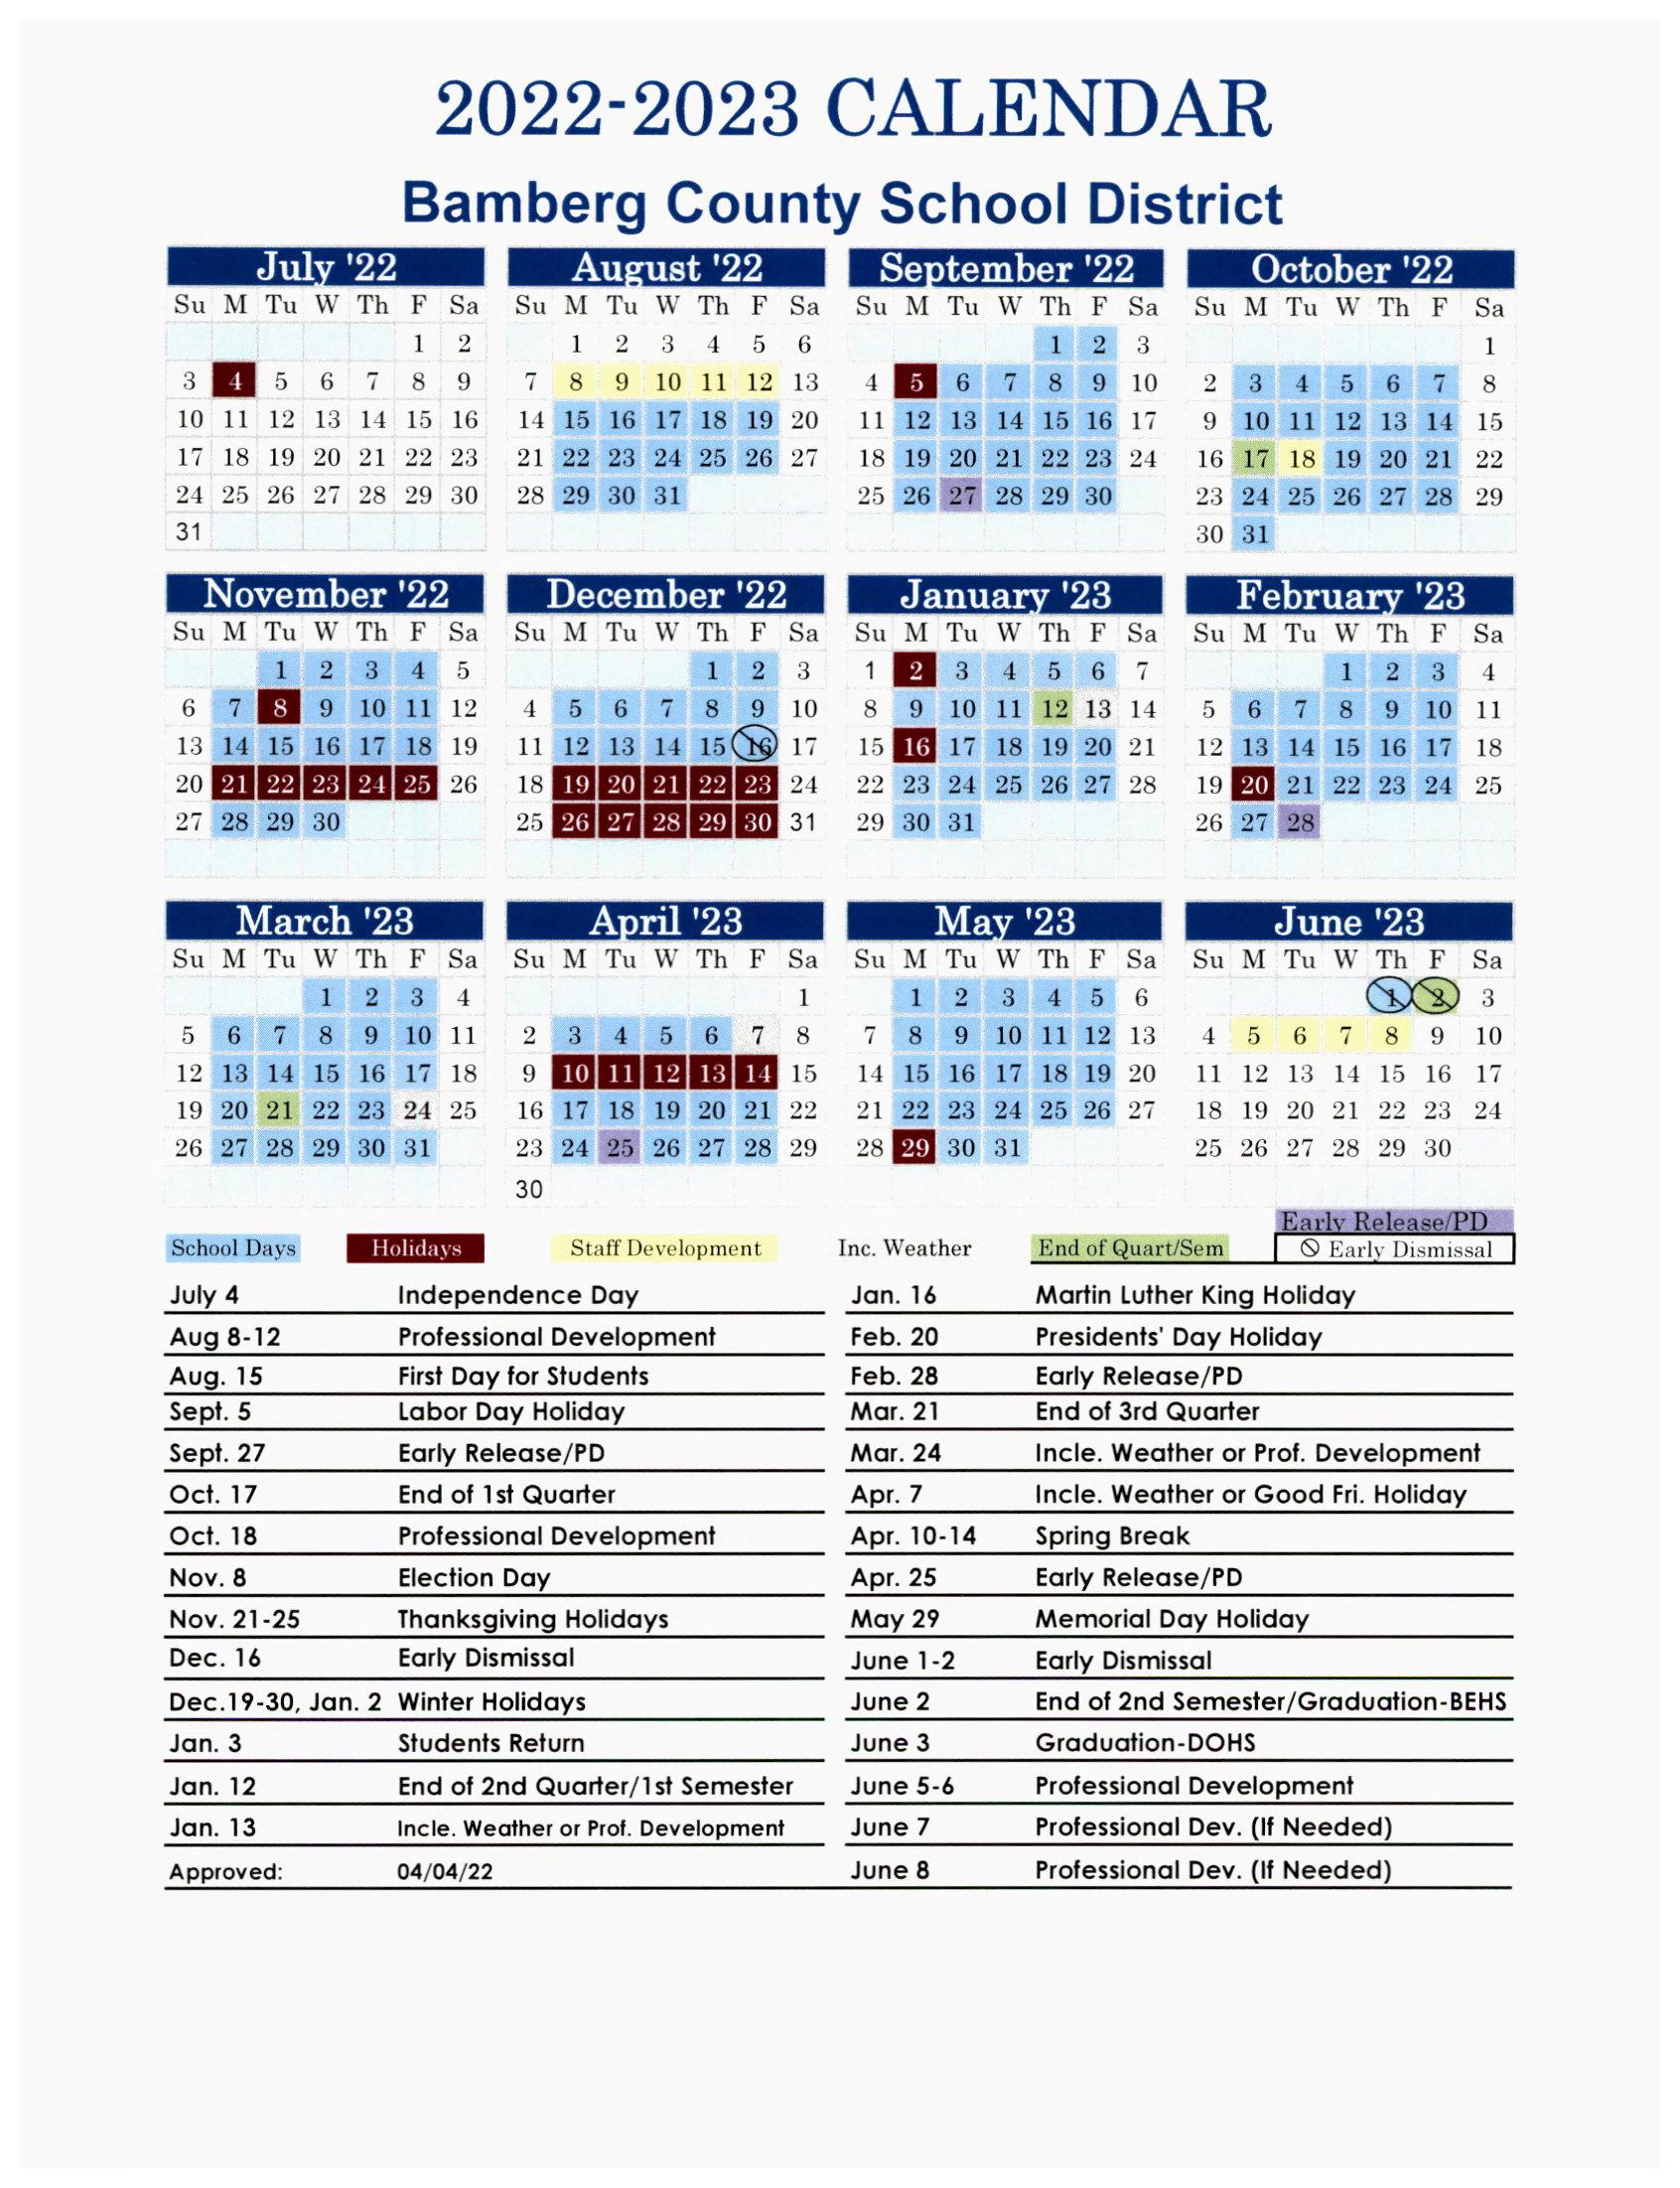 Bamberg County School District 2022 - 2023 Calendar